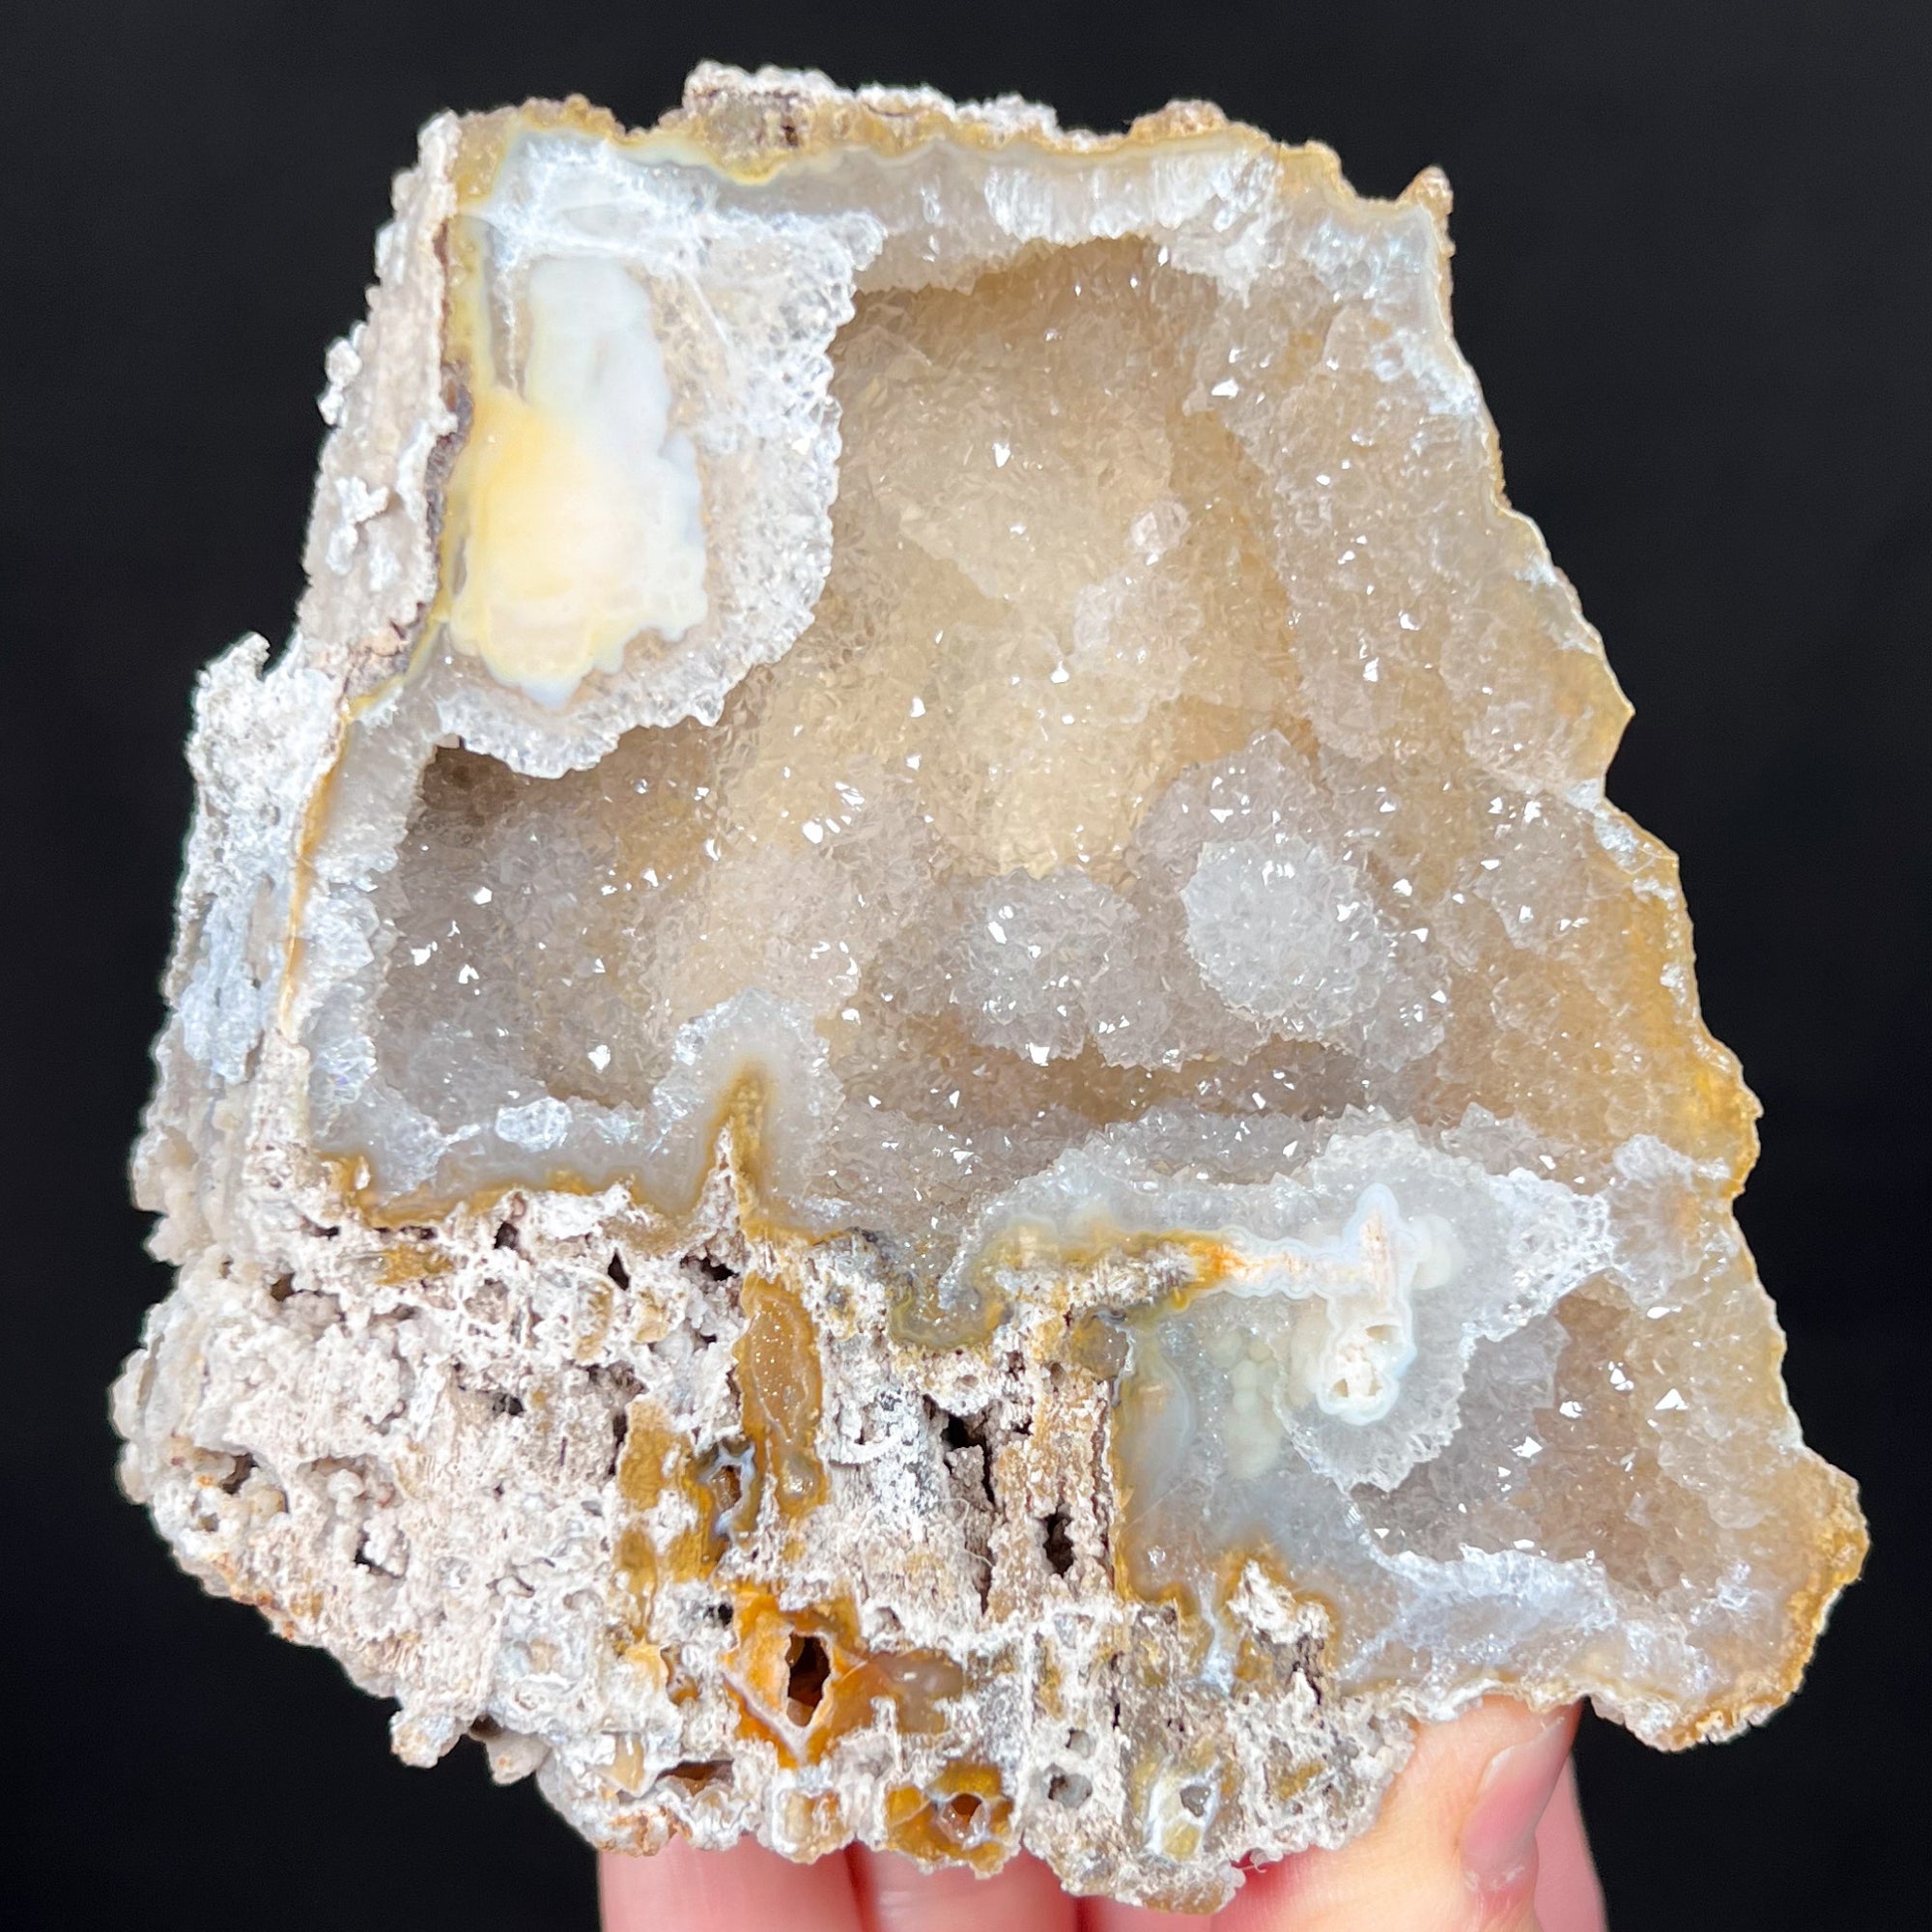 Drusy Quartz Crystals Inside Fossil Coral